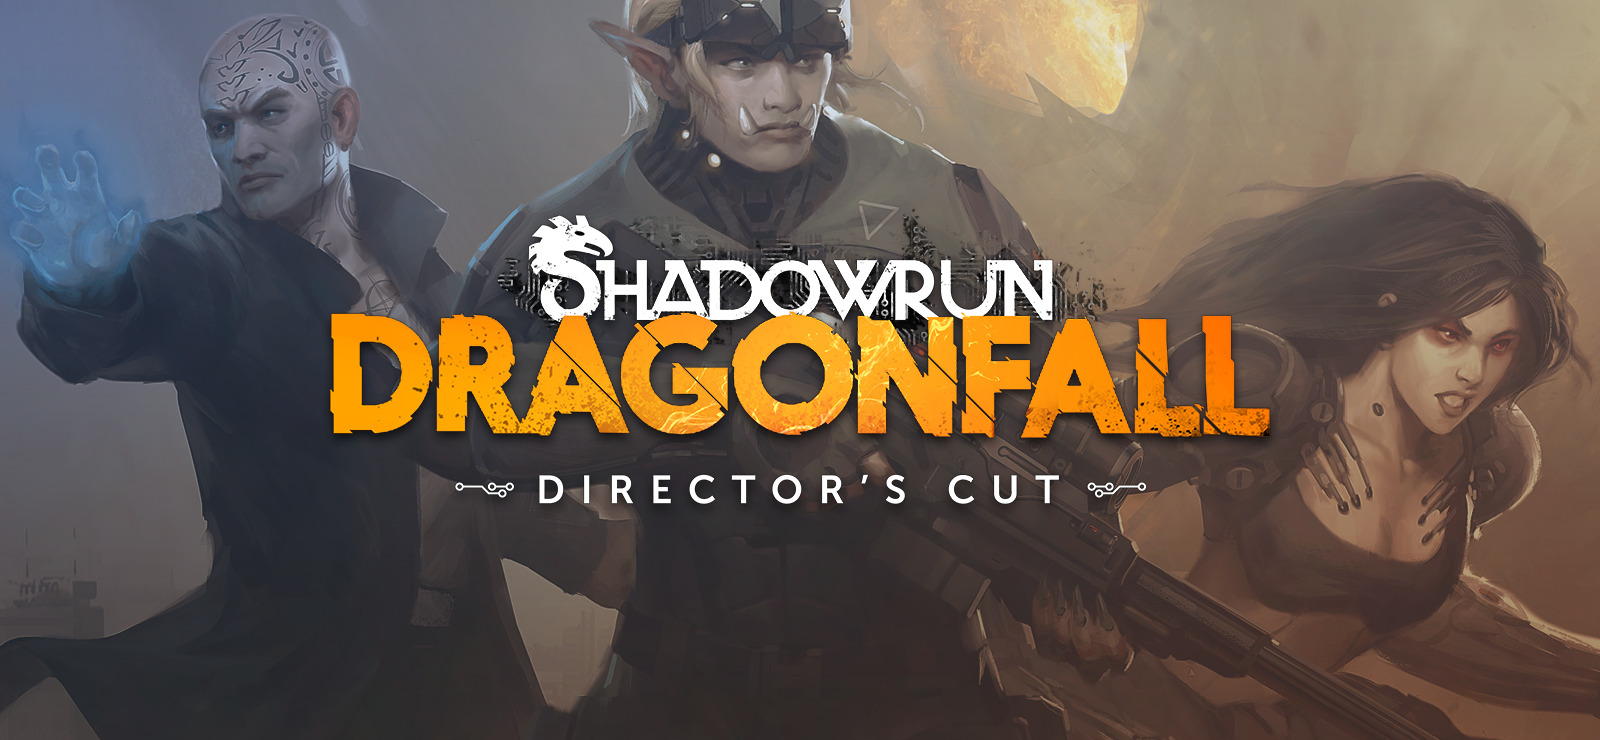 shadowrun free dragon